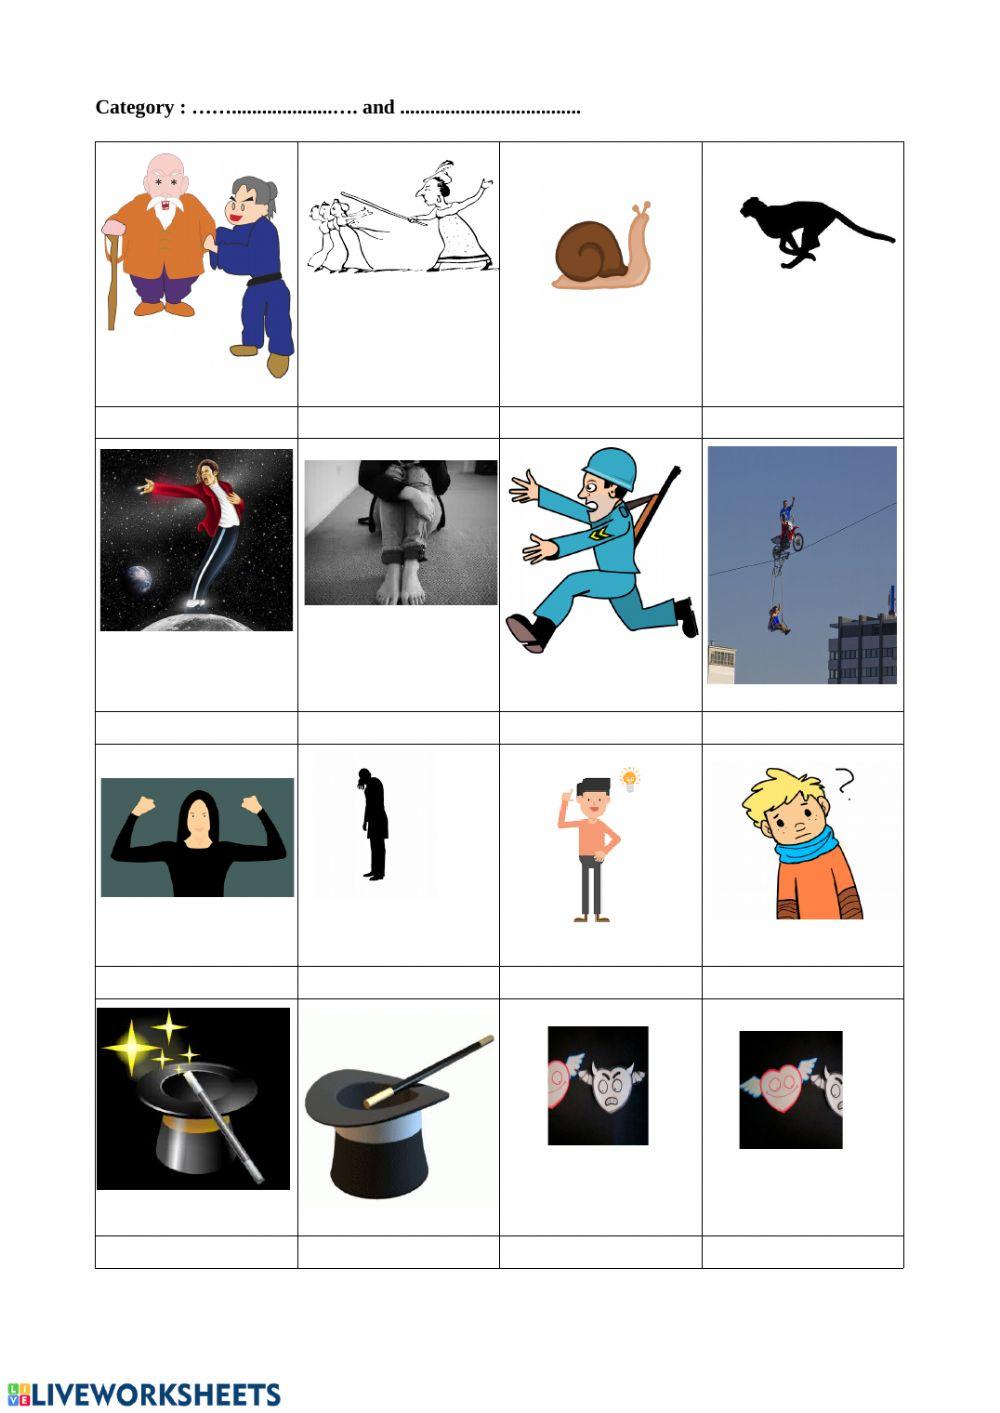 Superhero vocabulary - test